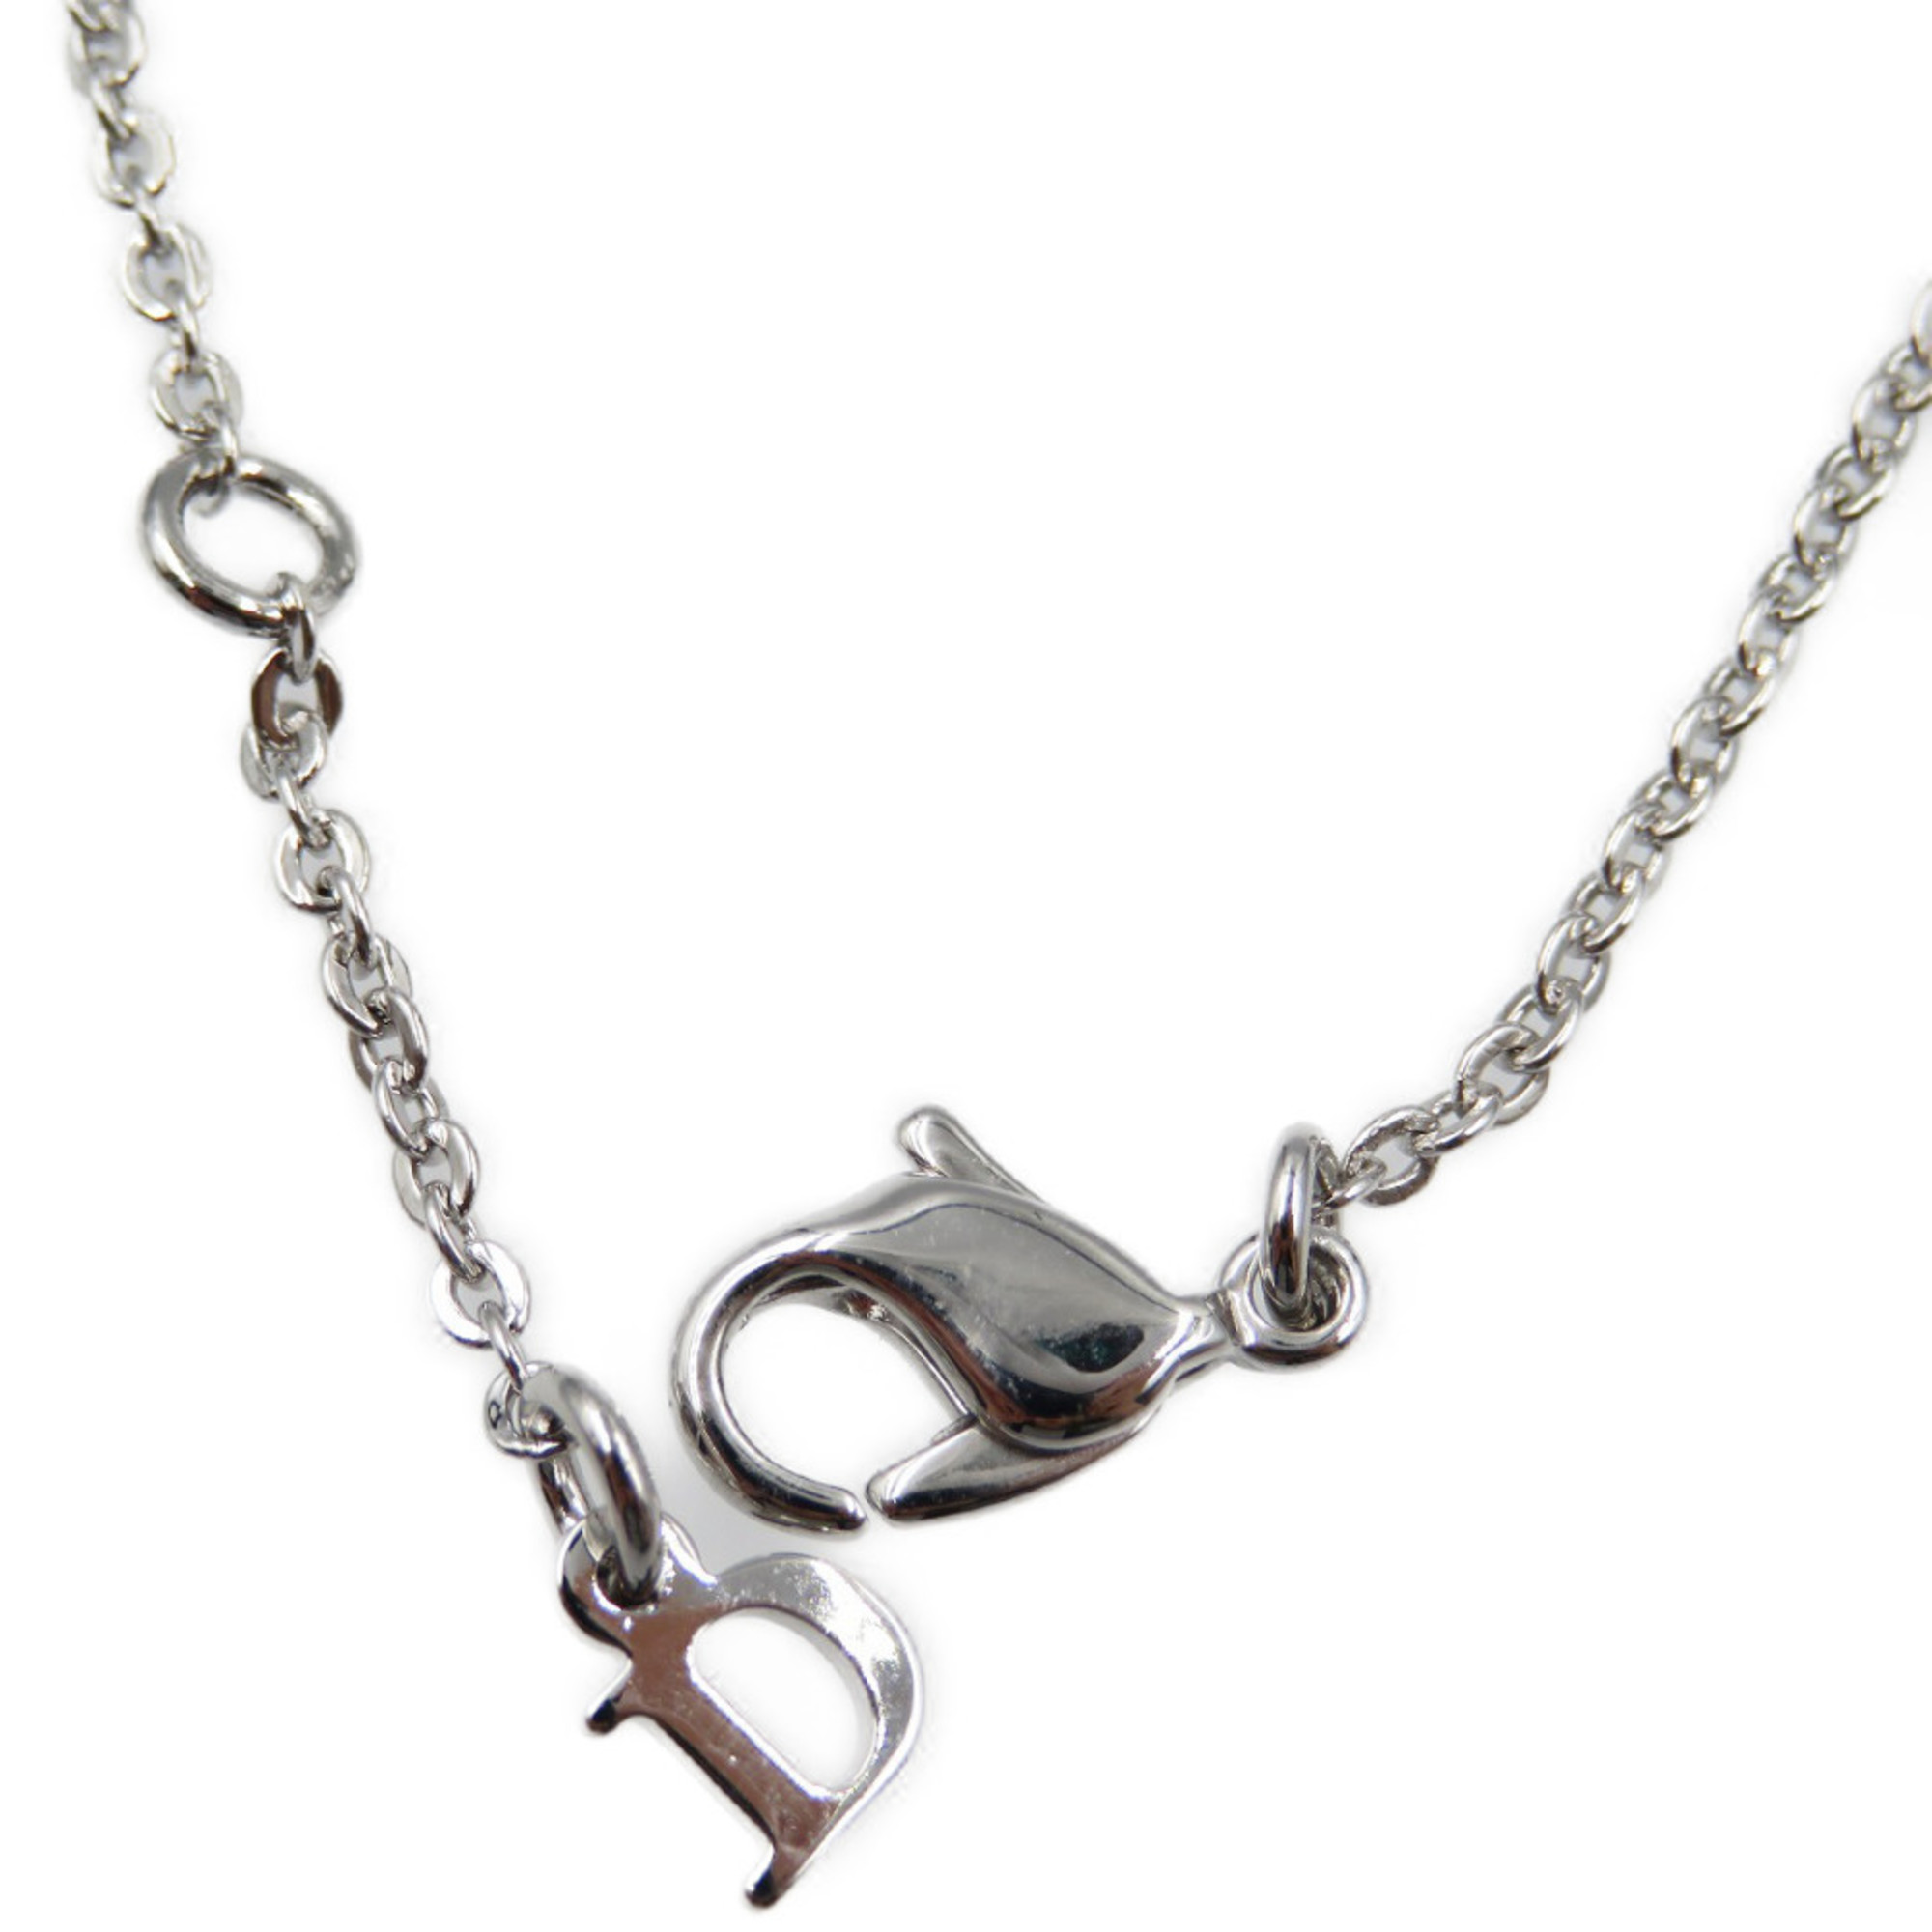 Christian Dior DIOR metal rhinestone silver bracelet